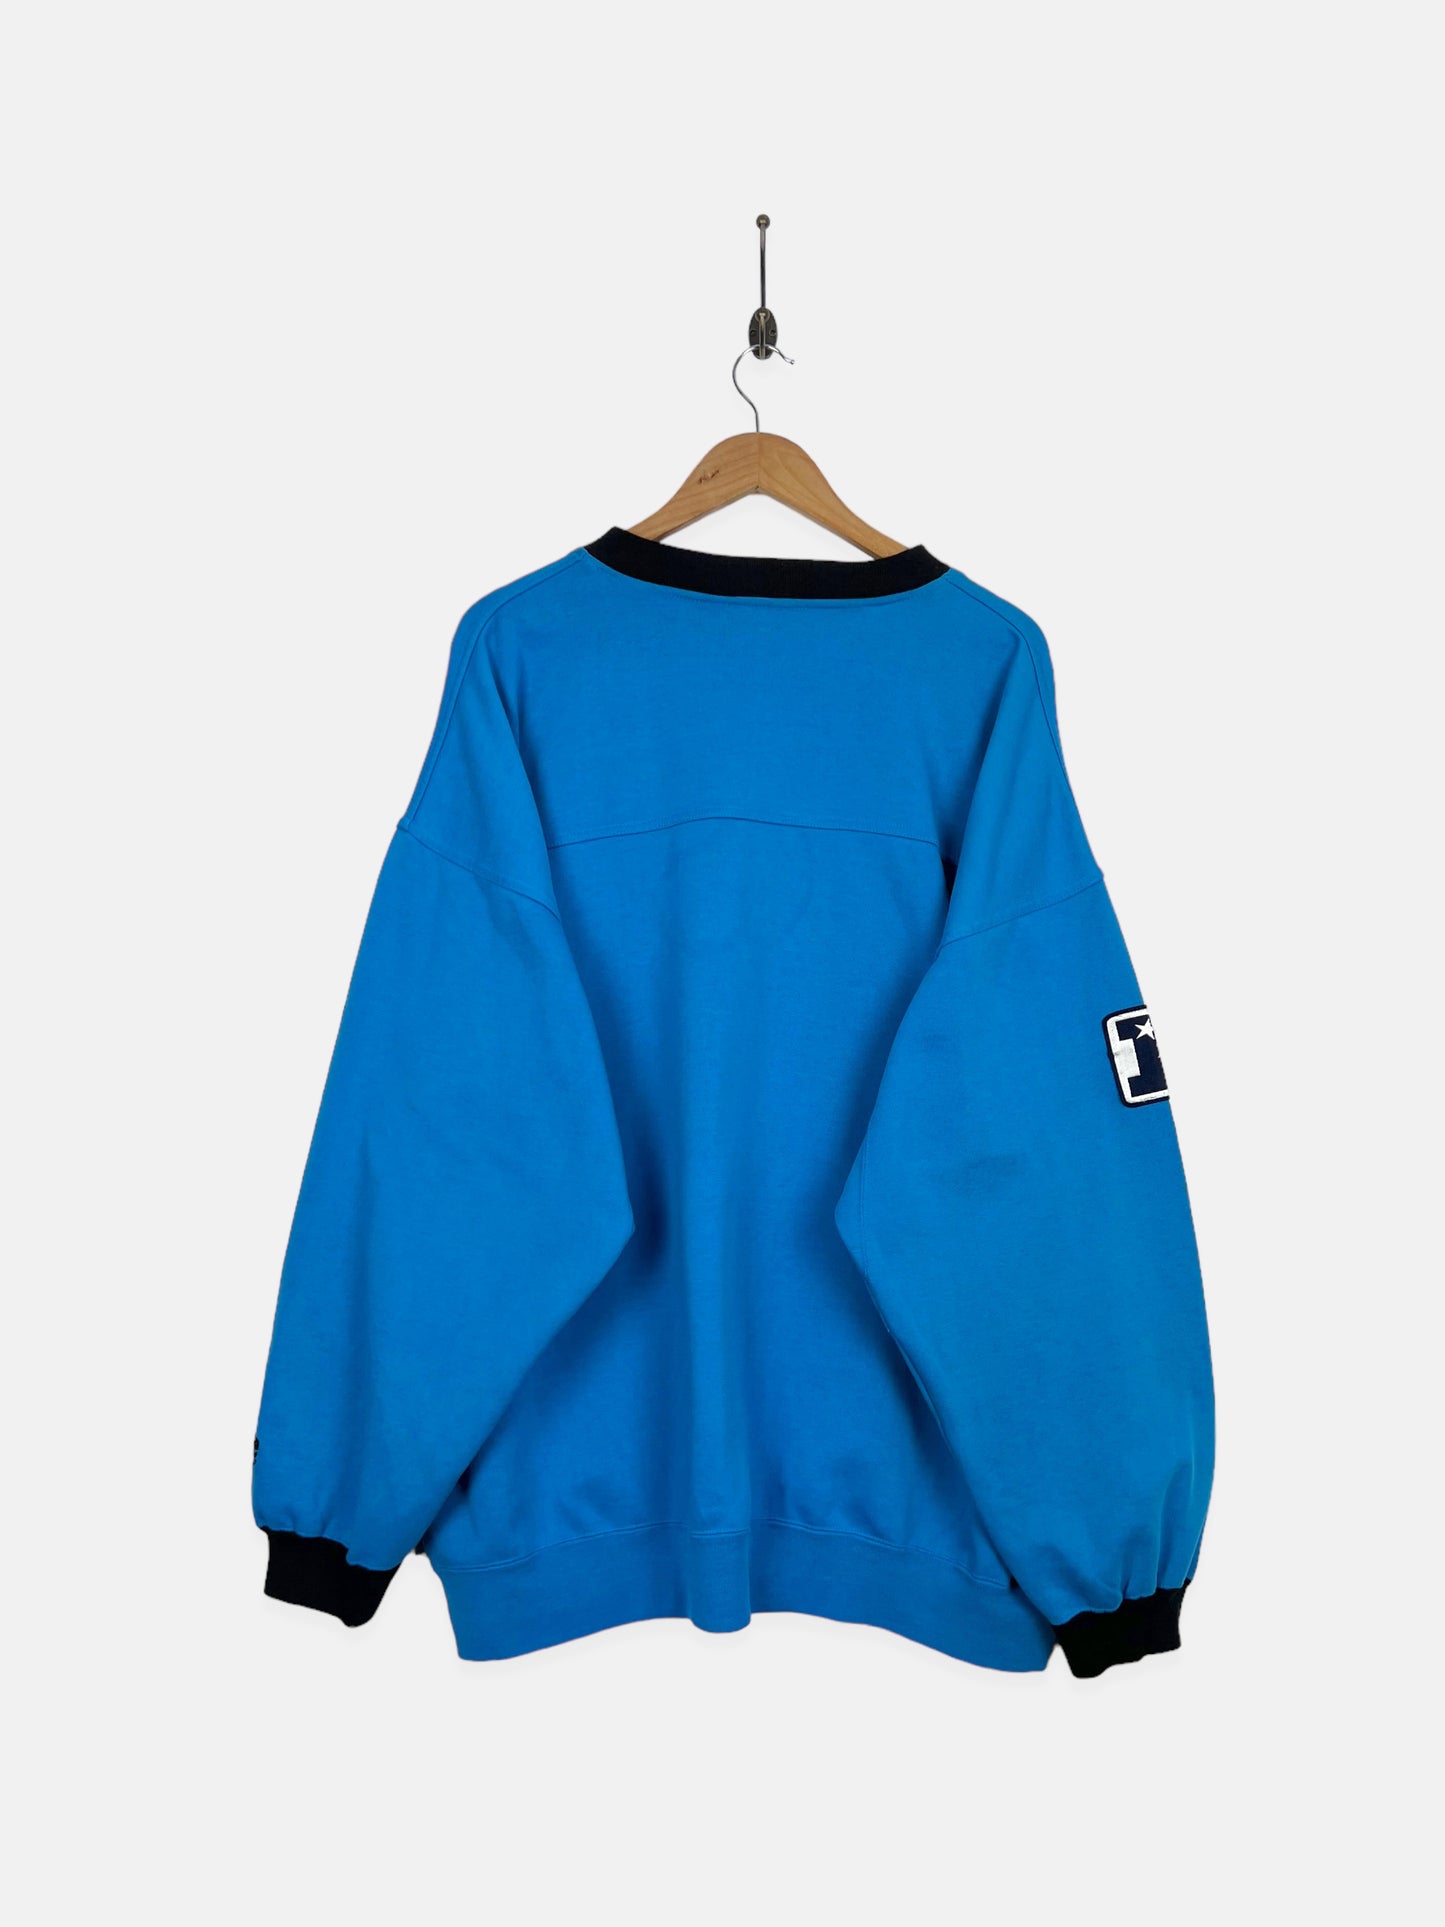 90's Carolina Panthers NFL Embroidered Vintage Sweatshirt Size 2-3XL